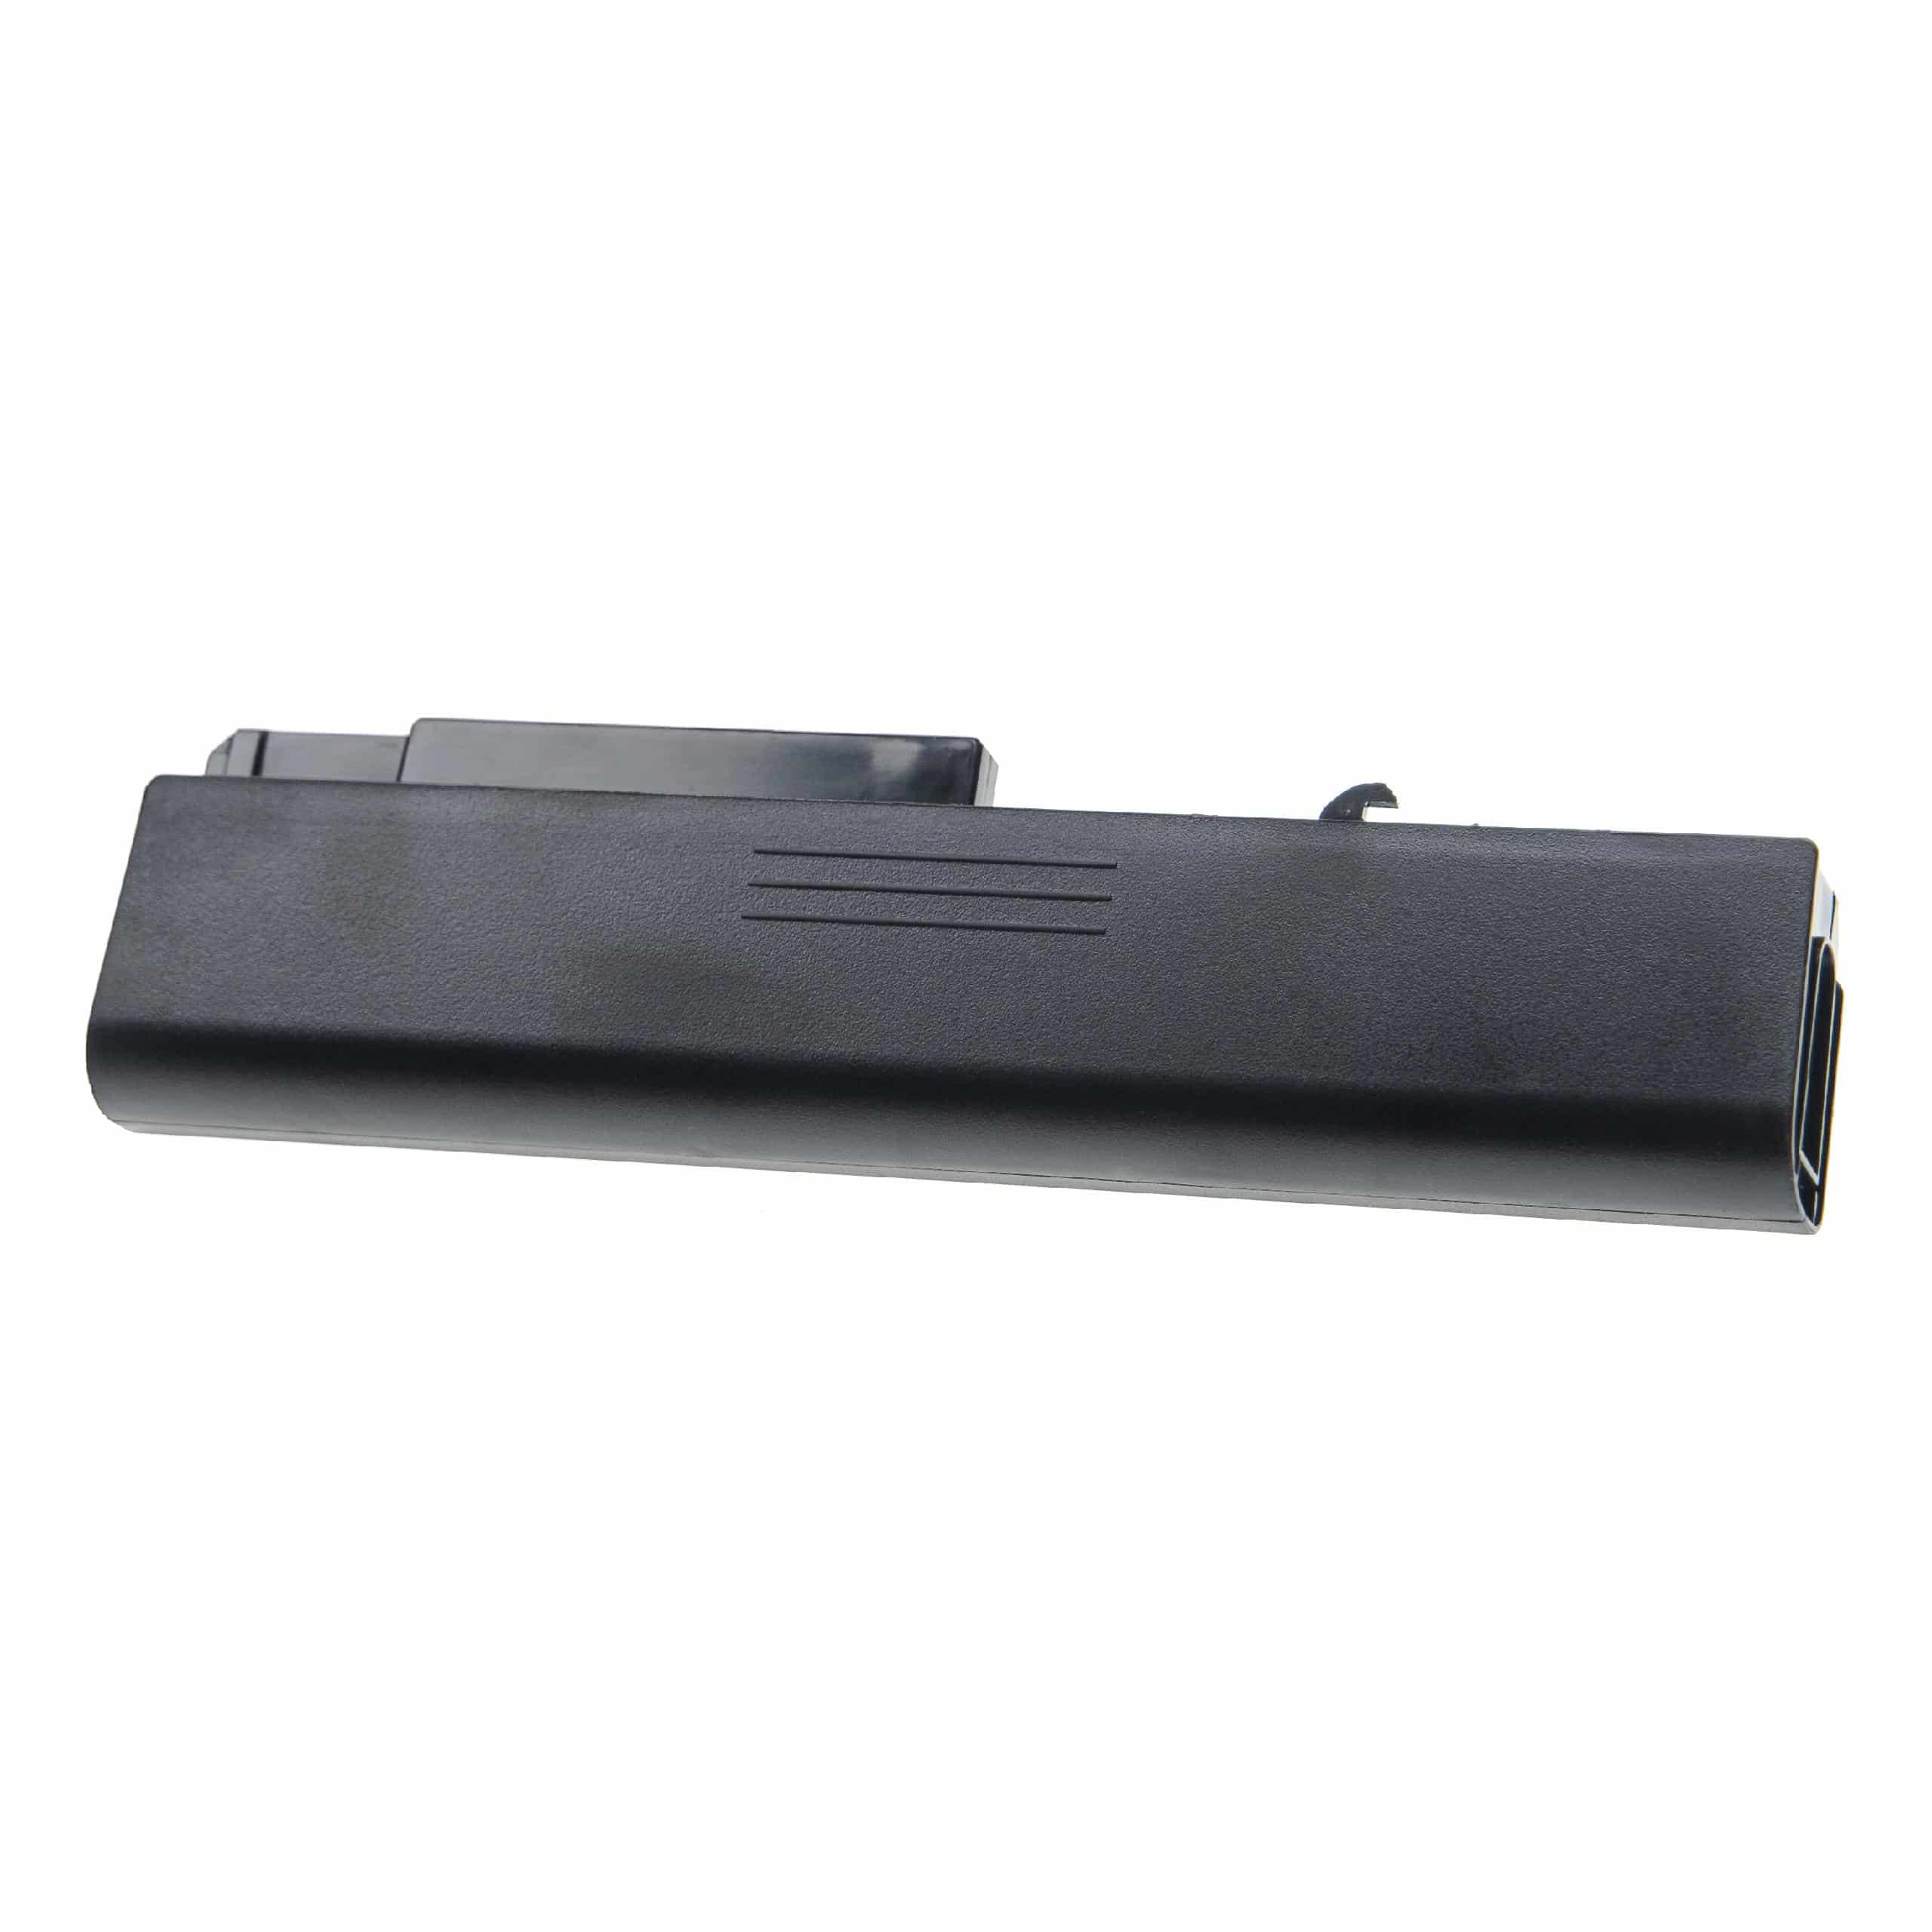 Akumulator do laptopa zamiennik HP HSTNN-144C-A, 491173-543, 484786-001 - 5200 mAh 10,8 V Li-Ion, czarny